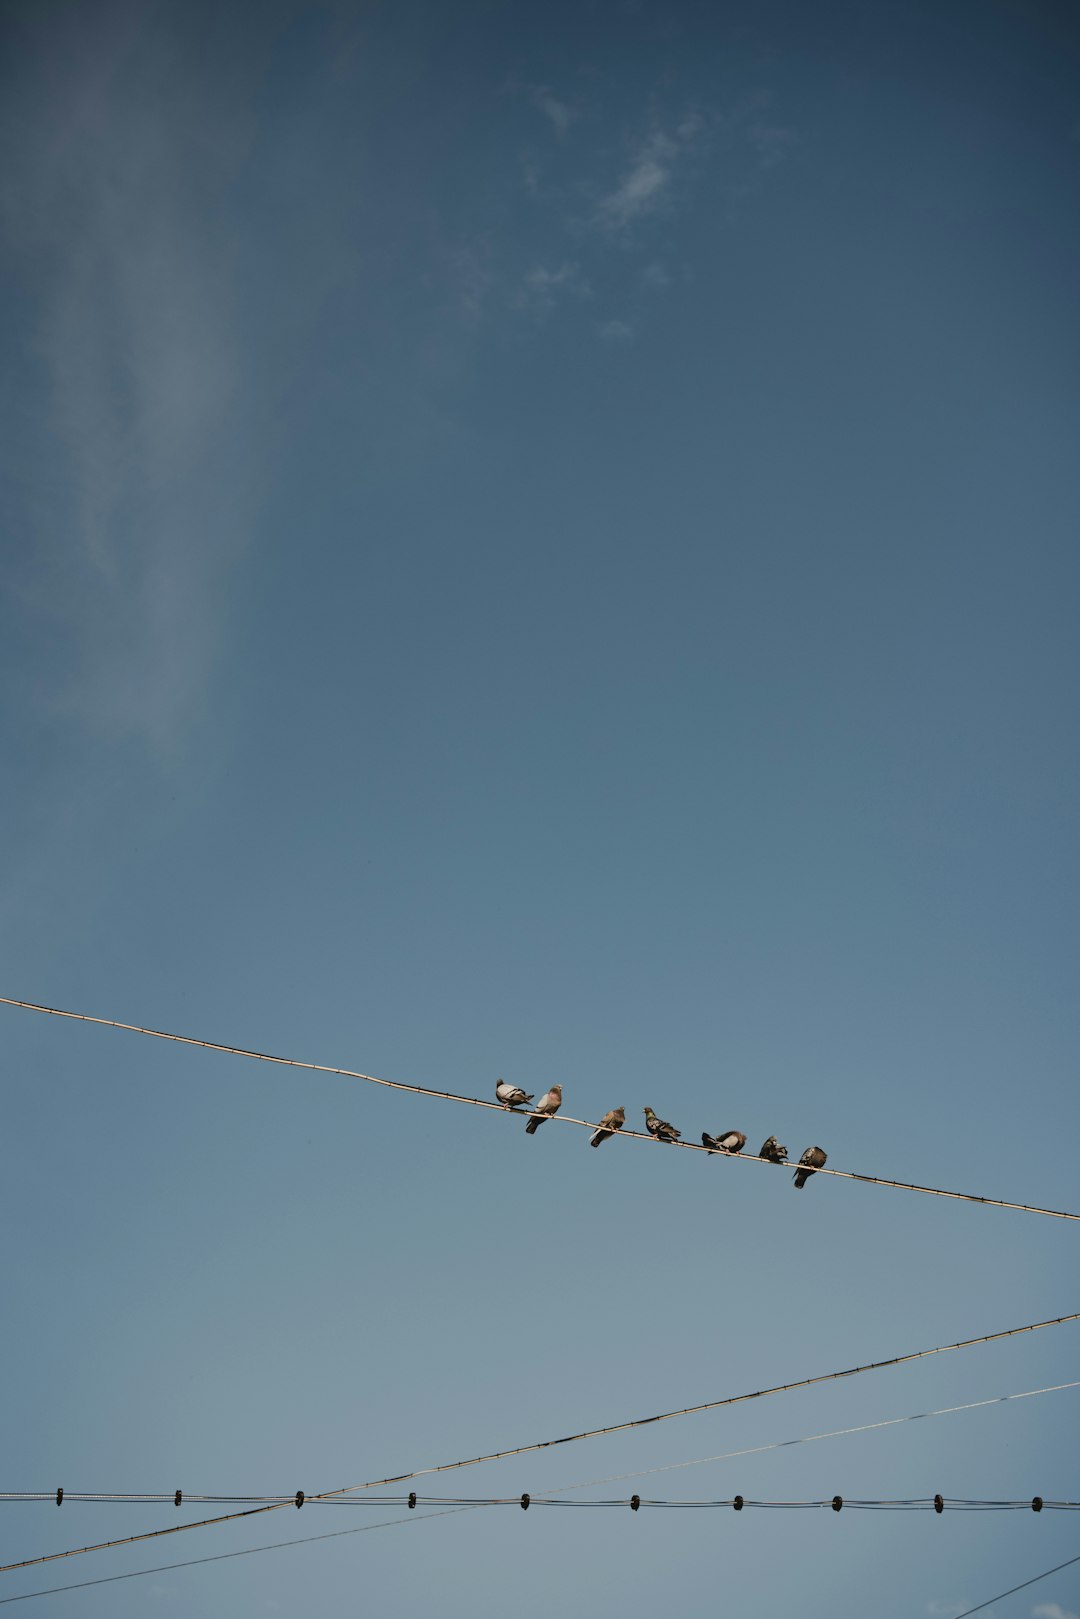 black birds on wire under blue sky during daytime